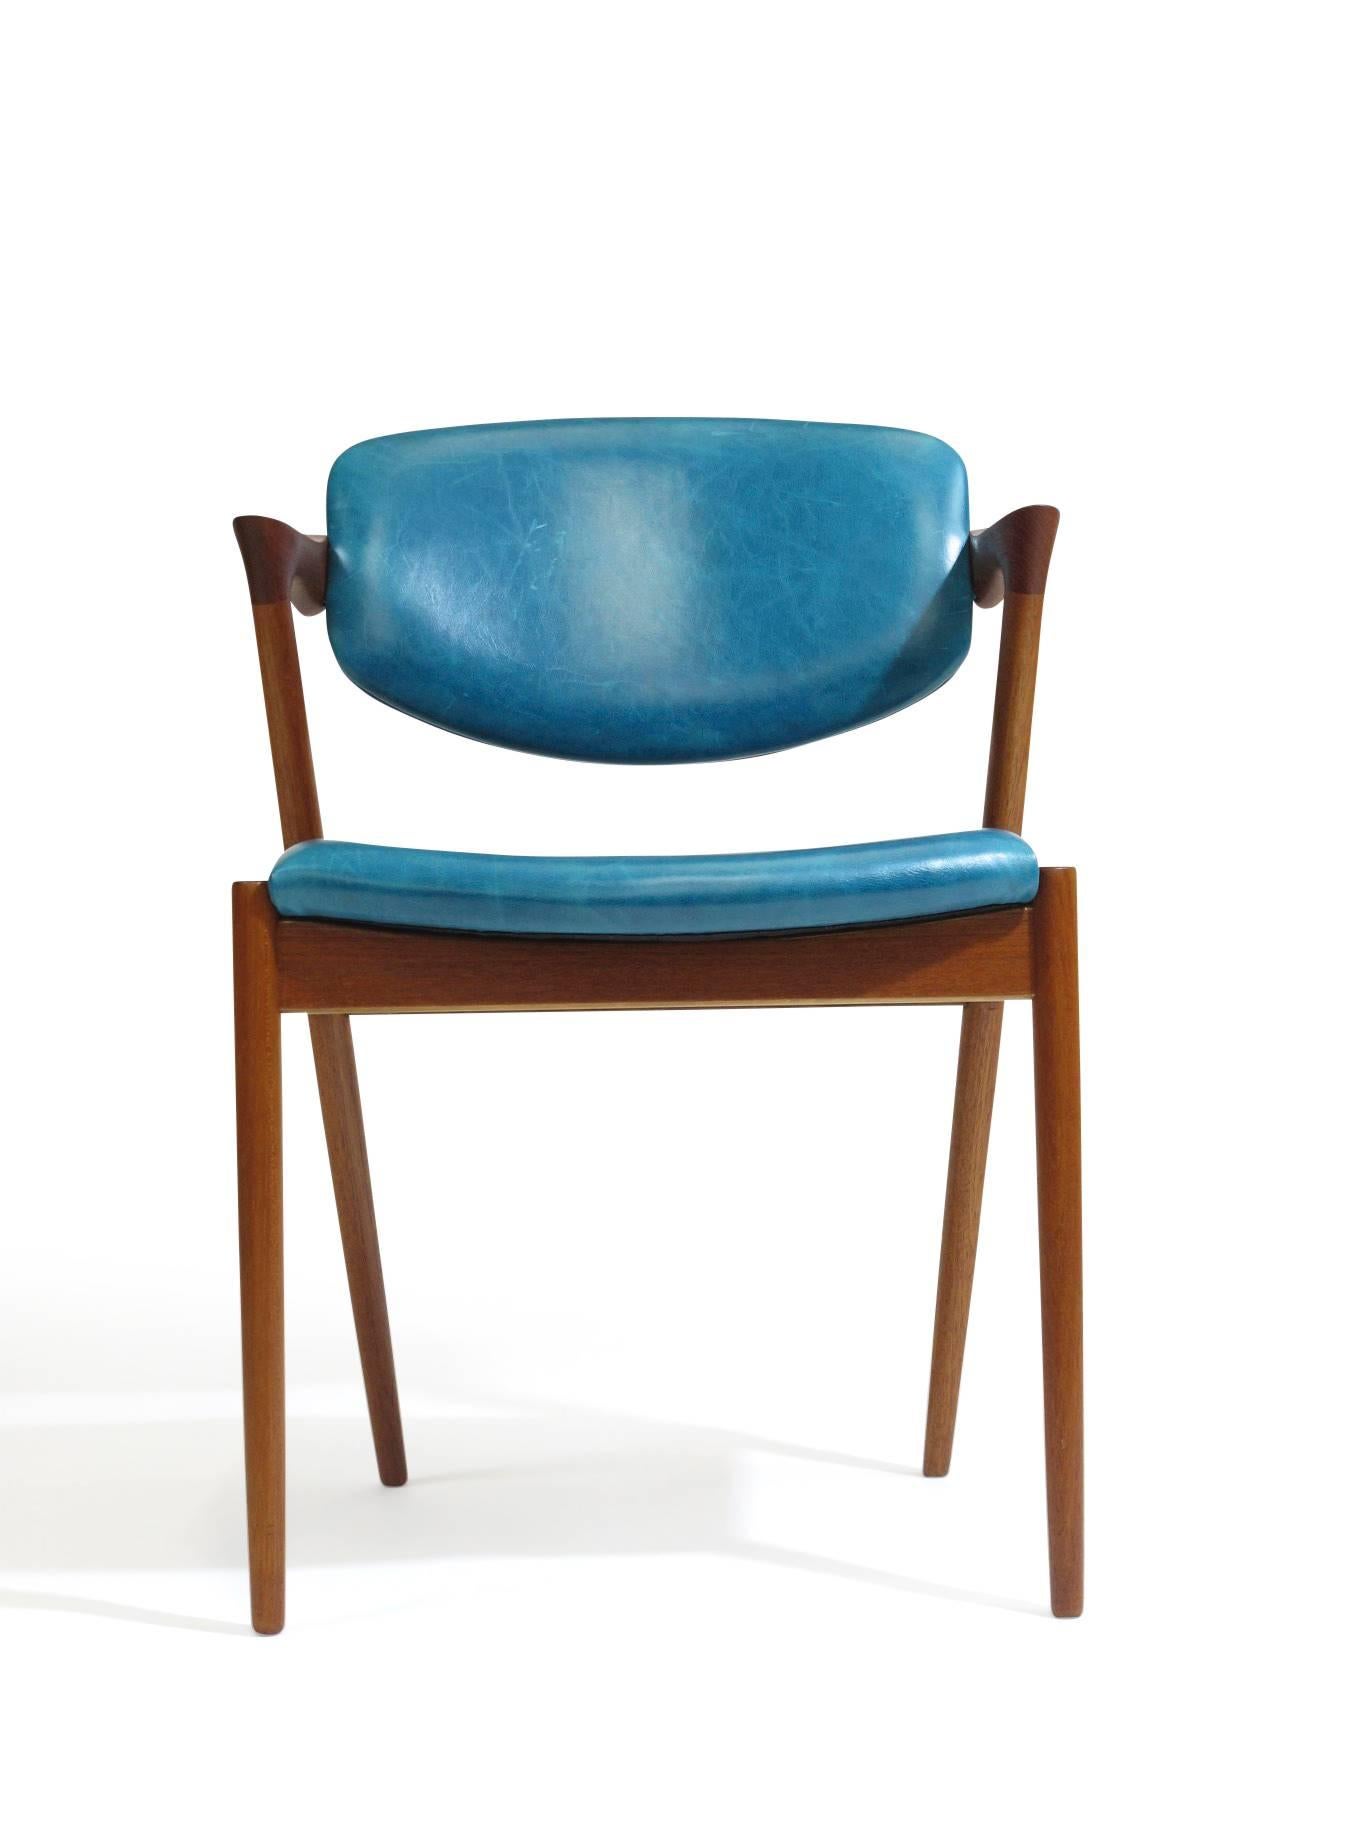 Scandinavian Modern Six Kai Kristiansen Teak Danish Dining Chairs in Turquoise Leather, 20 Available